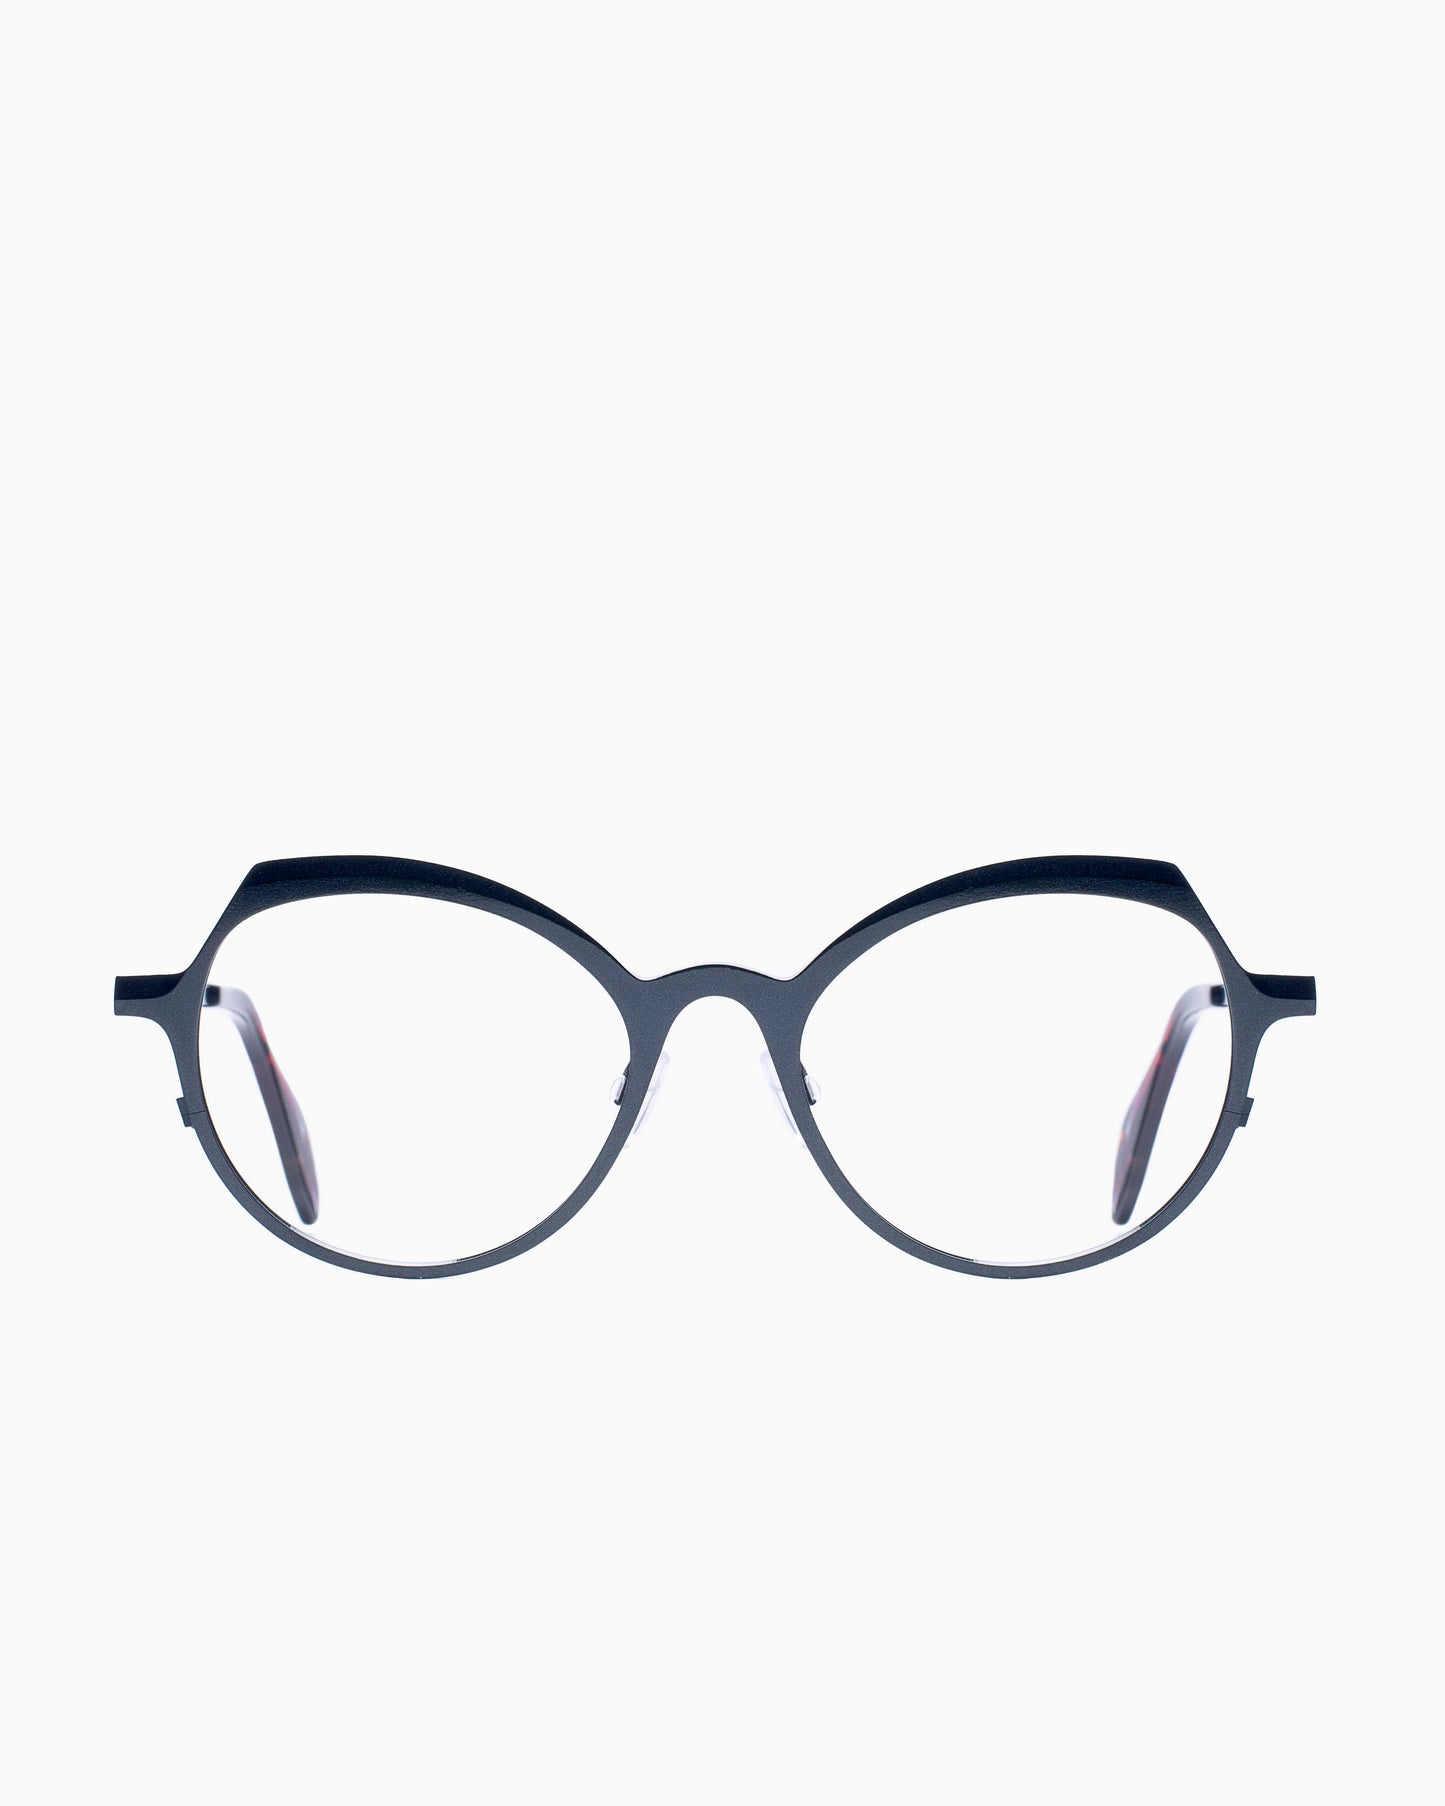 Theo - Pendant - 501 | glasses bar